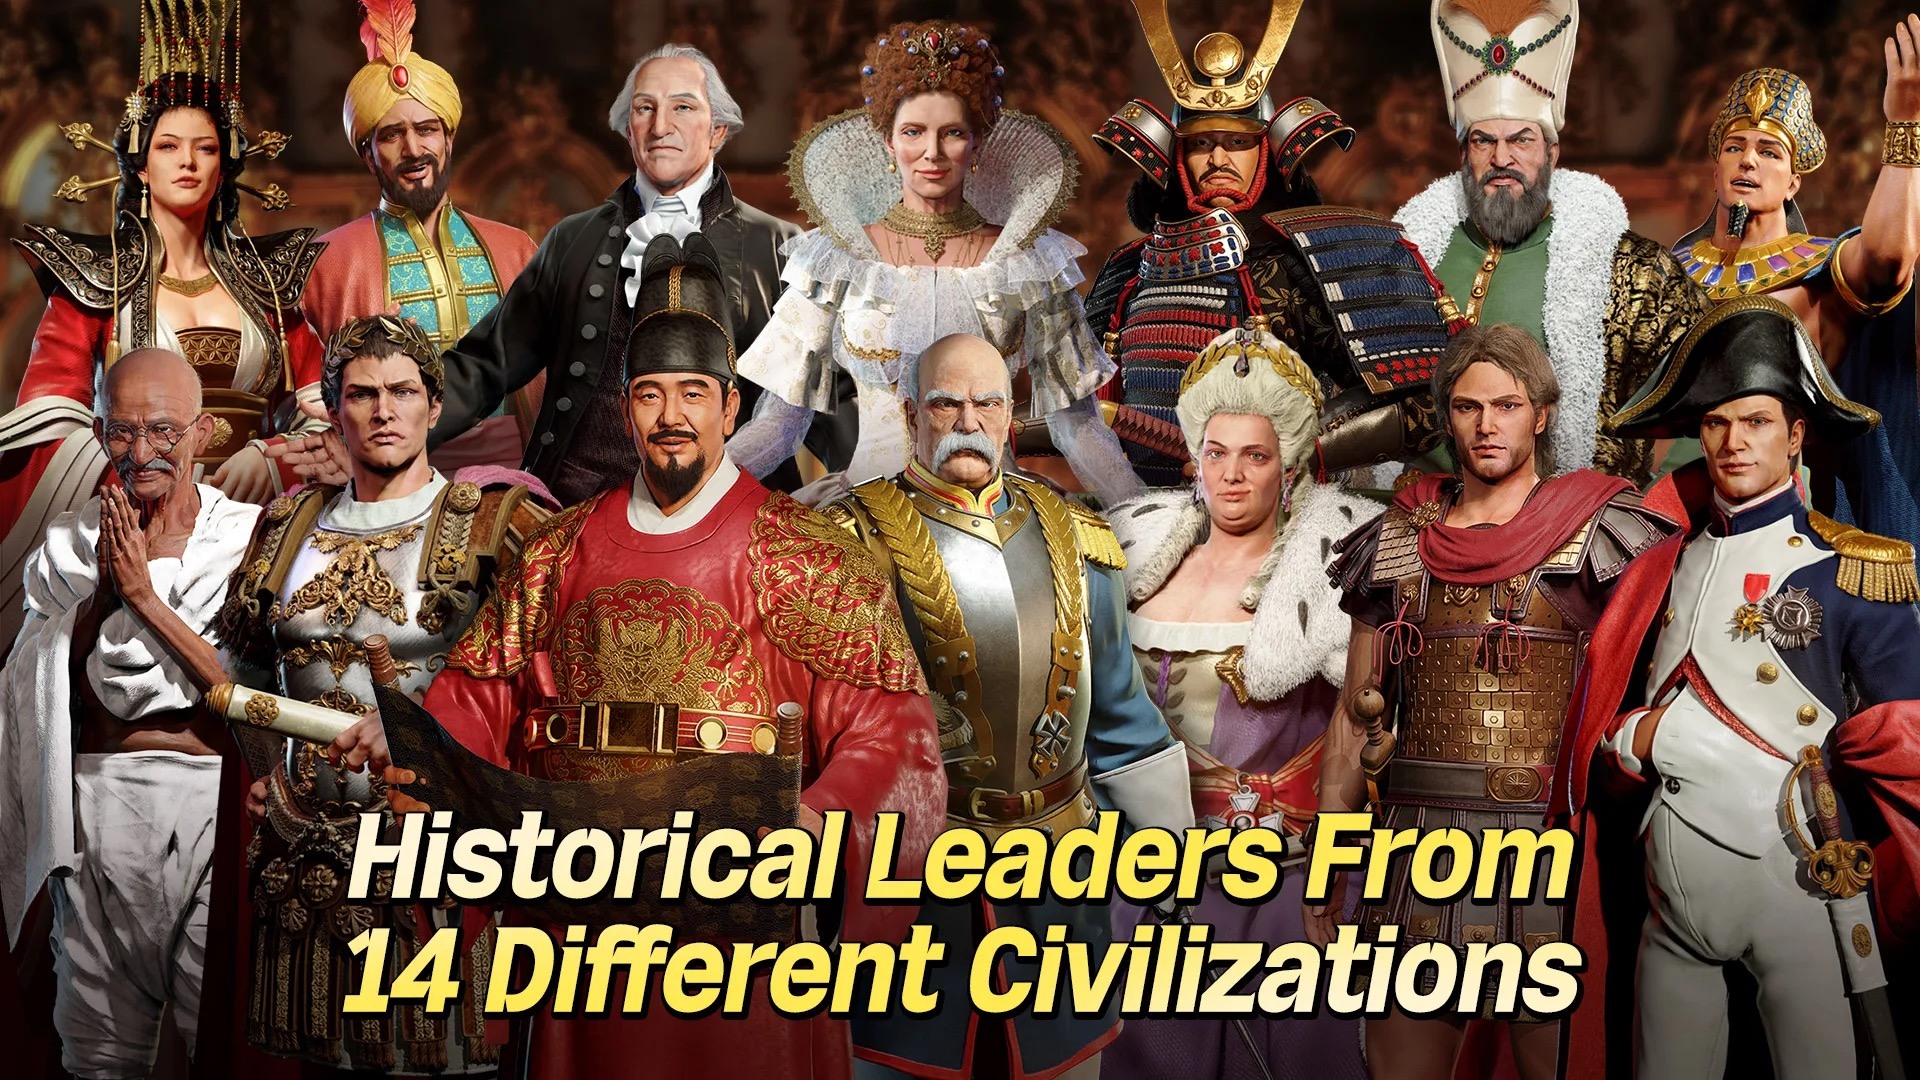 Civilization: Reign of Power - Game mobile chiến thuật thuộc thương hiệu Civilization lừng danh